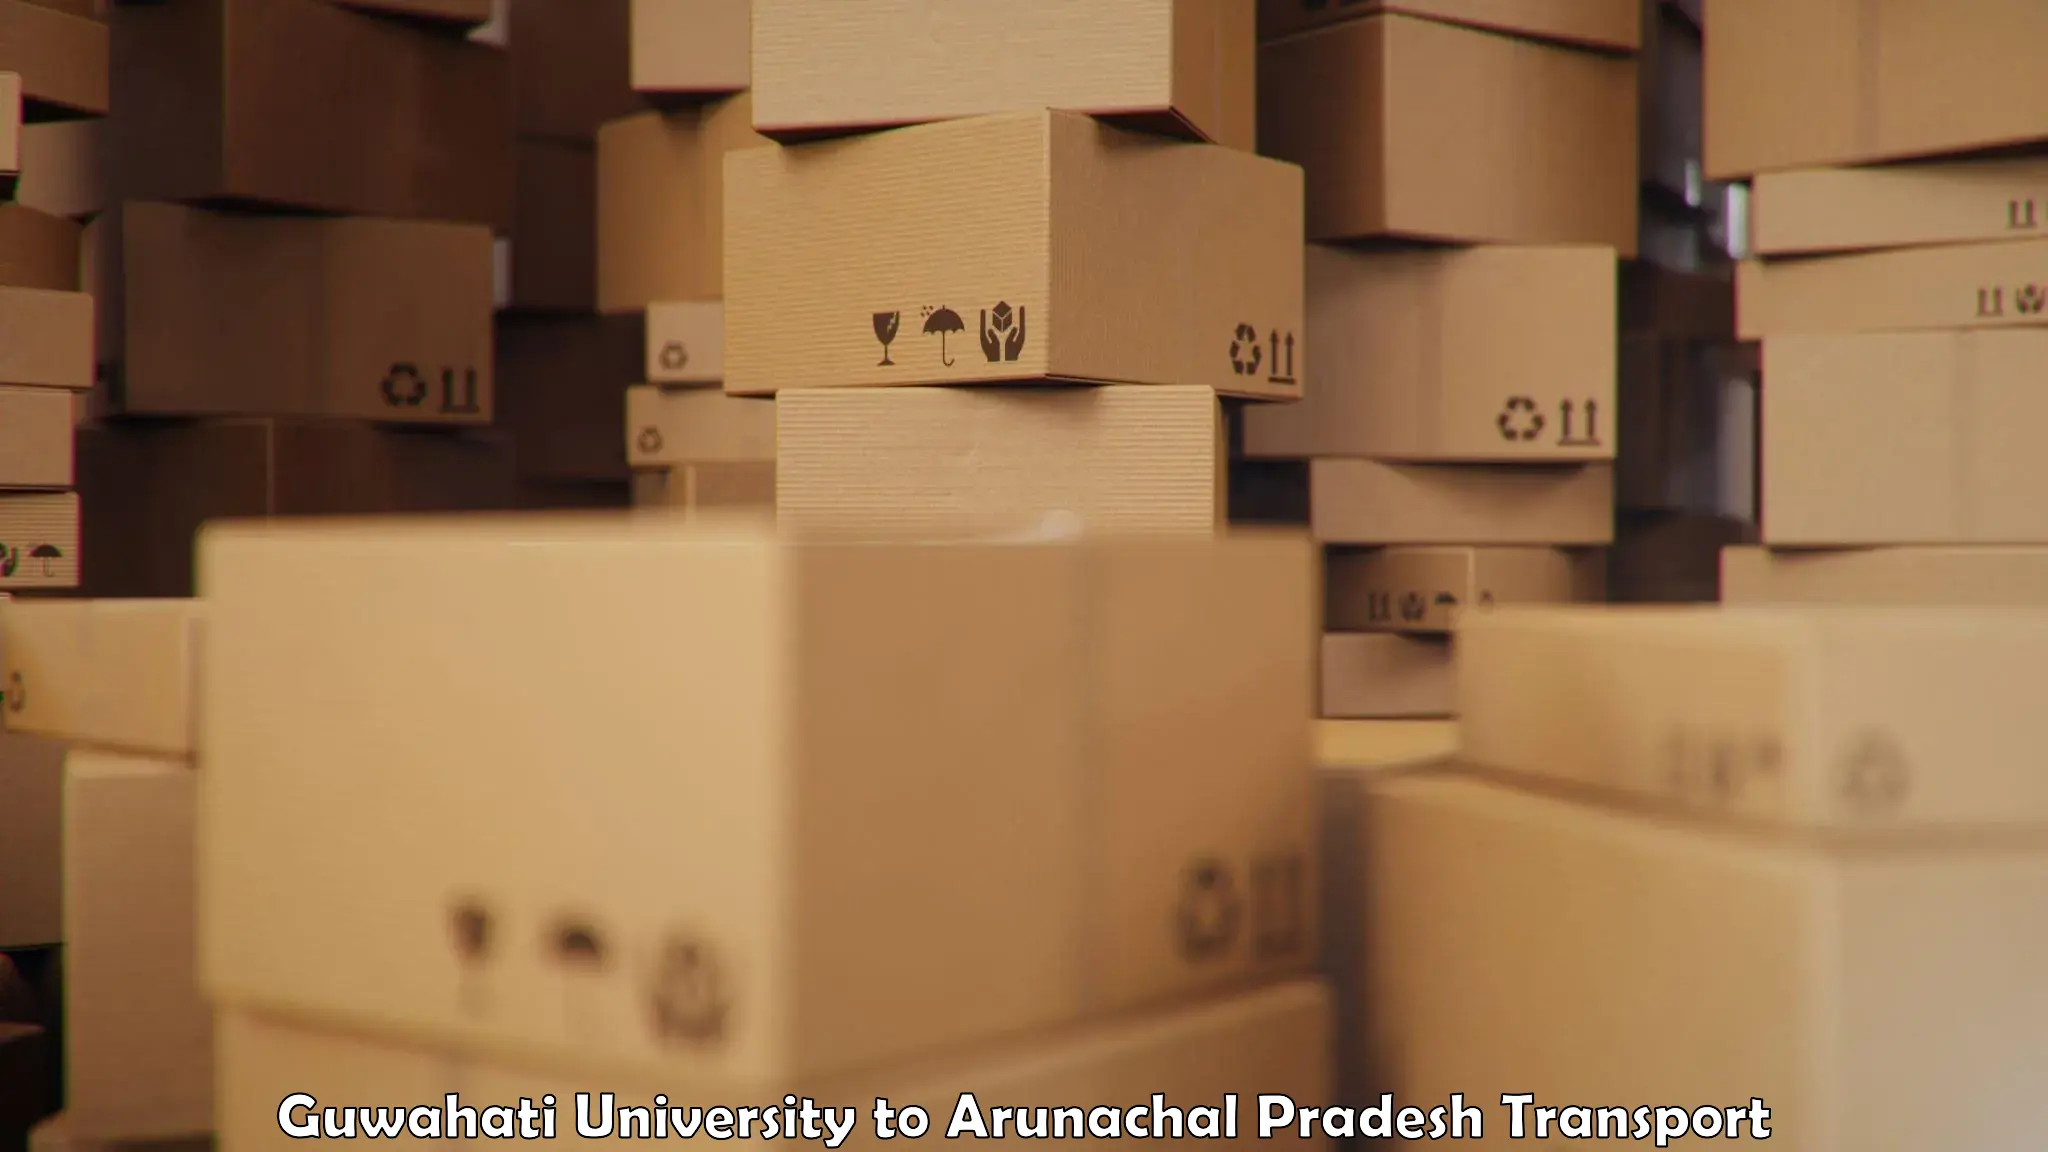 Part load transport service in India Guwahati University to Tawang